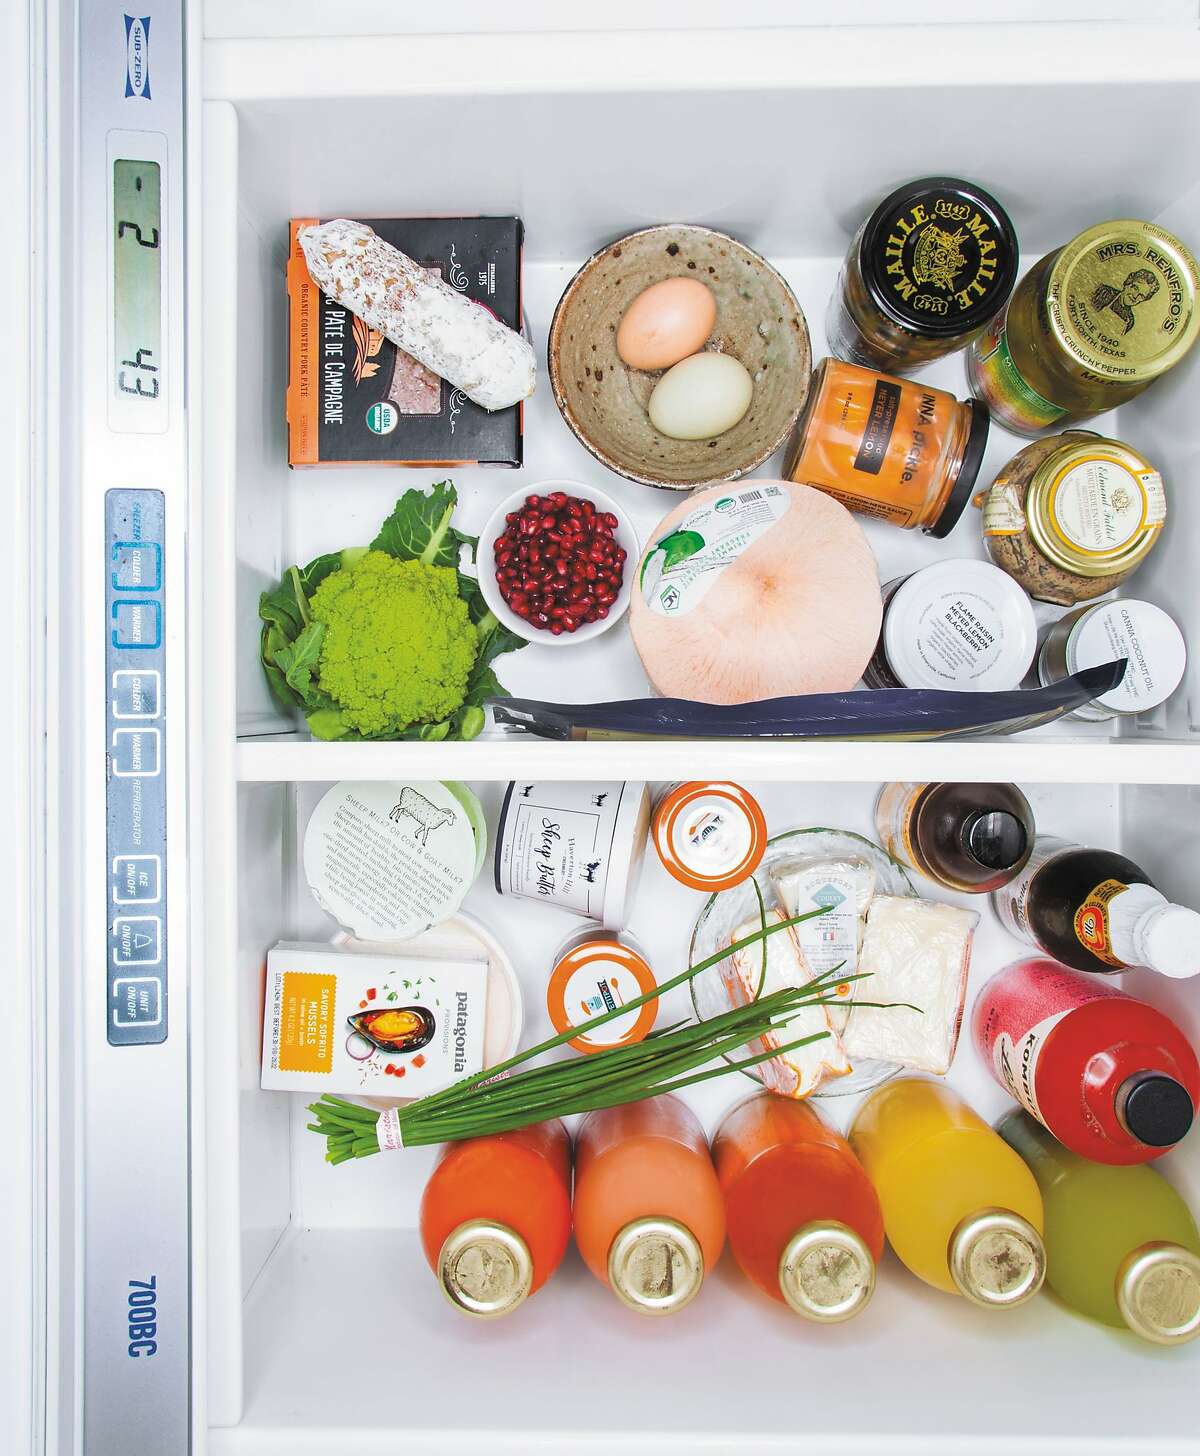 Dominique Crenn's fridge